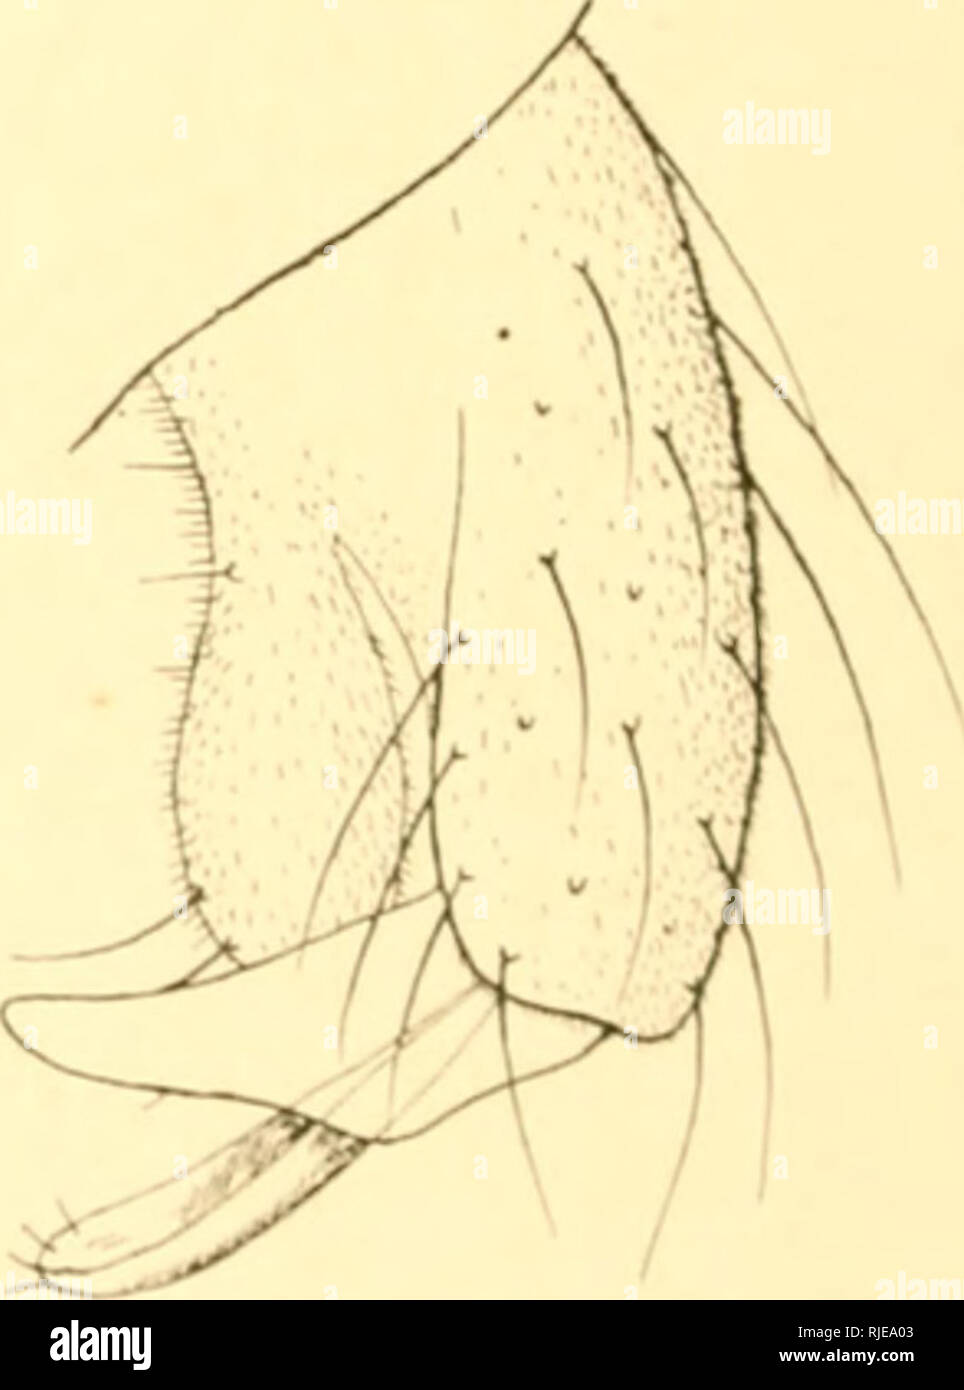 . Ceratopogoninae de Belgique. Diptera; Ceratopogonidae. lui. r,. â l'alpe de TricliocliiJhi'' iiliJipti. I''iii. 02. â l'incc de Triclioflii- Jiui iiiiJipn. FiG. OA- â l'incc de Di/'IoiliiJiiis ciillrigtr. (ii.NKi DIPl.OCL.ADIL S KiiiiiK I. cxcmplane qui- j'ai capture &lt;lirtÃ¨ie du type dÃ©crit par kiKlKKK (Zeitscb f wi^sensch [lis Biol , 7, 10081 par la coloratifMi, ipii est noire; niesonotum Ã peine luisant, abdomen brun-noir, pattes brun jaimÃ¢trc, balanciers blanchÃ¢tres, l'ince (hg. 03) l'aille : 4.5 mm O cultrijfcr KlKFV.. Please note that these images are extracted from scanned page Stock Photo